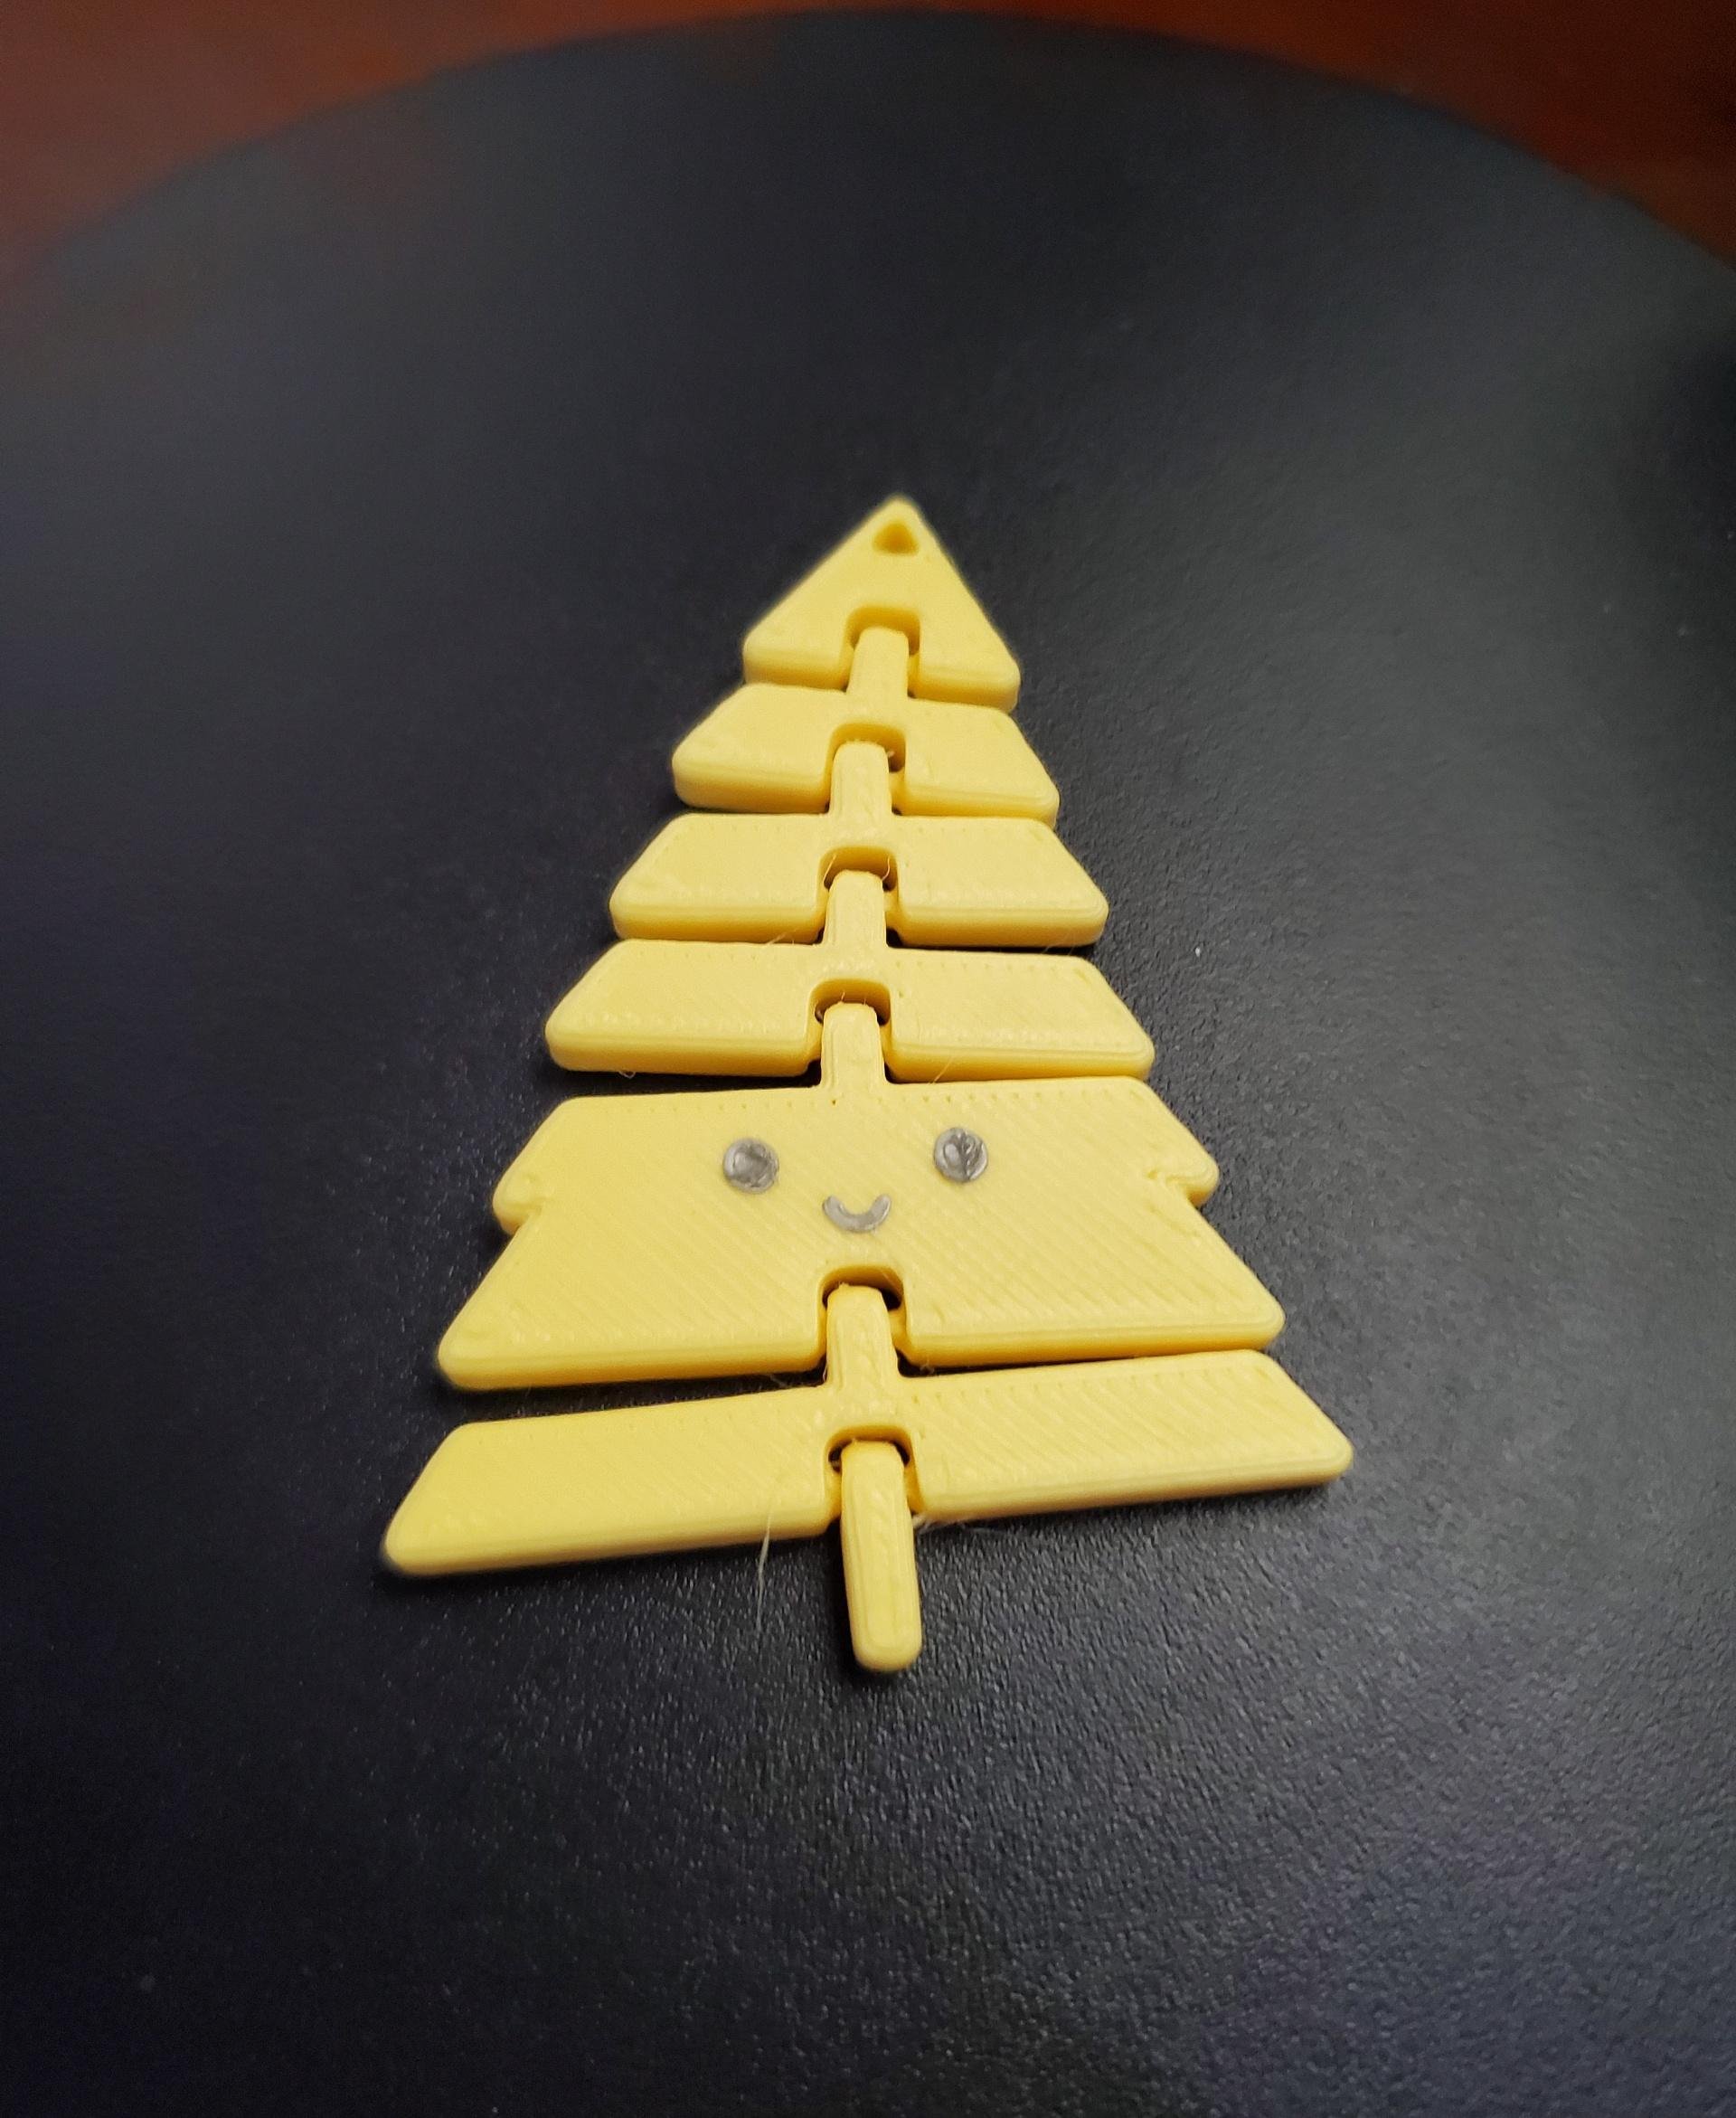 Articulated Kawaii Christmas Tree Keychain - Print in place fidget toy - 3mf - polyterra banana - 3d model